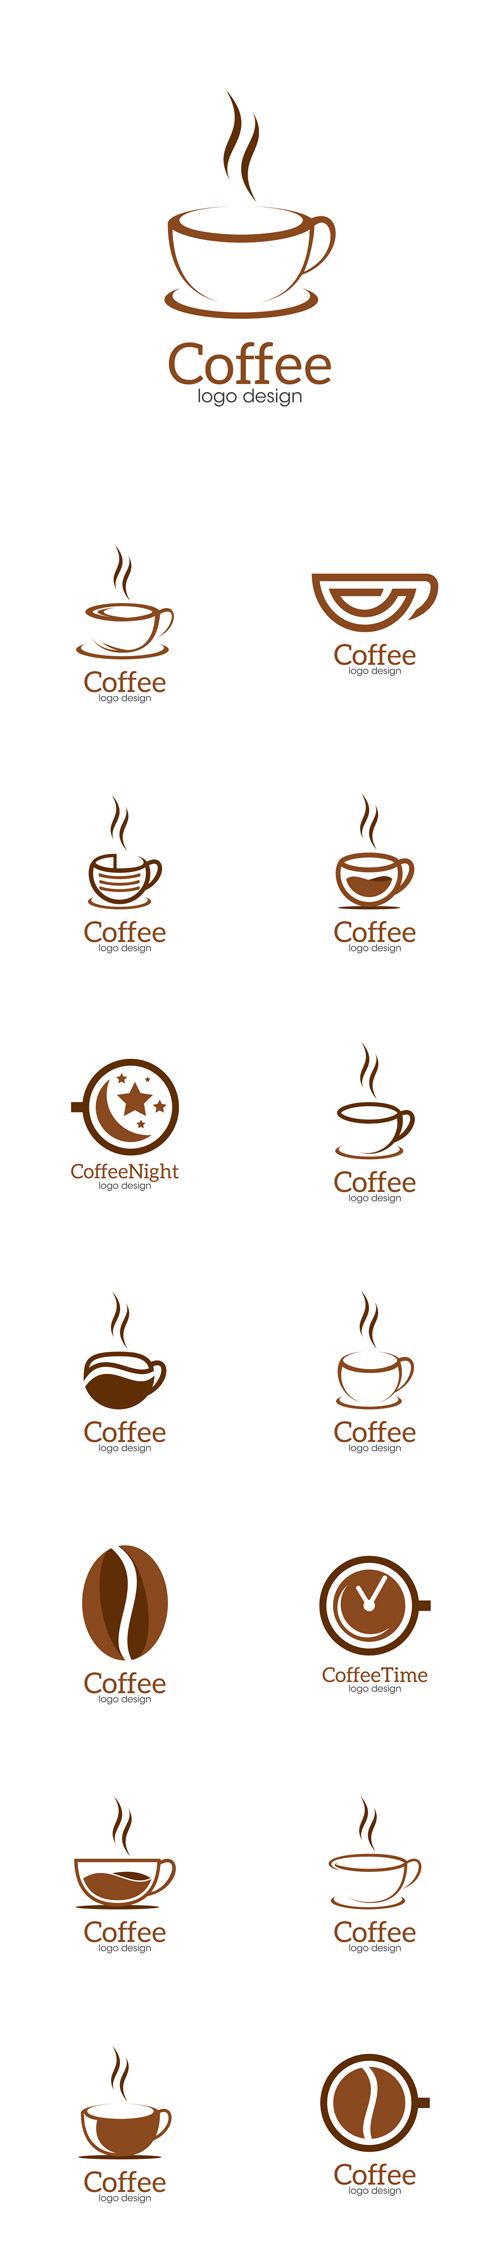 Vectors - Coffee Creative Concept Logo Design Templates